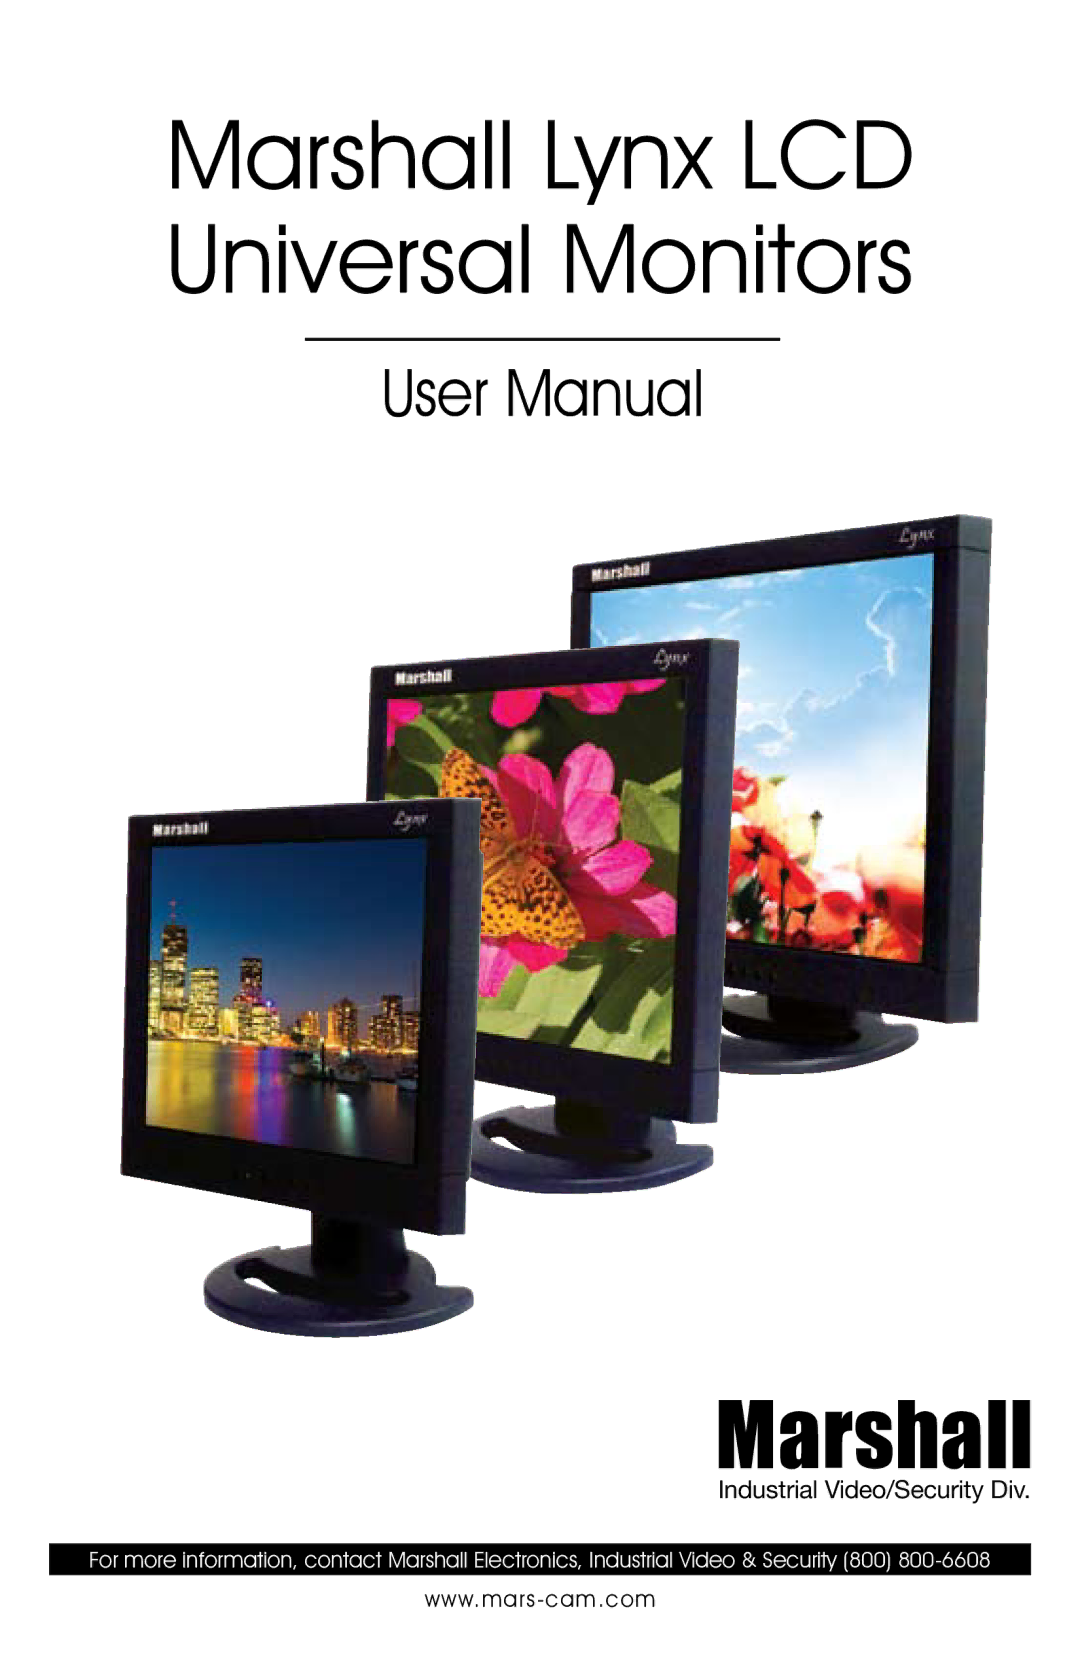 Marshall electronic MLYNX17 user manual Marshall Lynx LCD Universal Monitors, Industrial Video/Security Div 